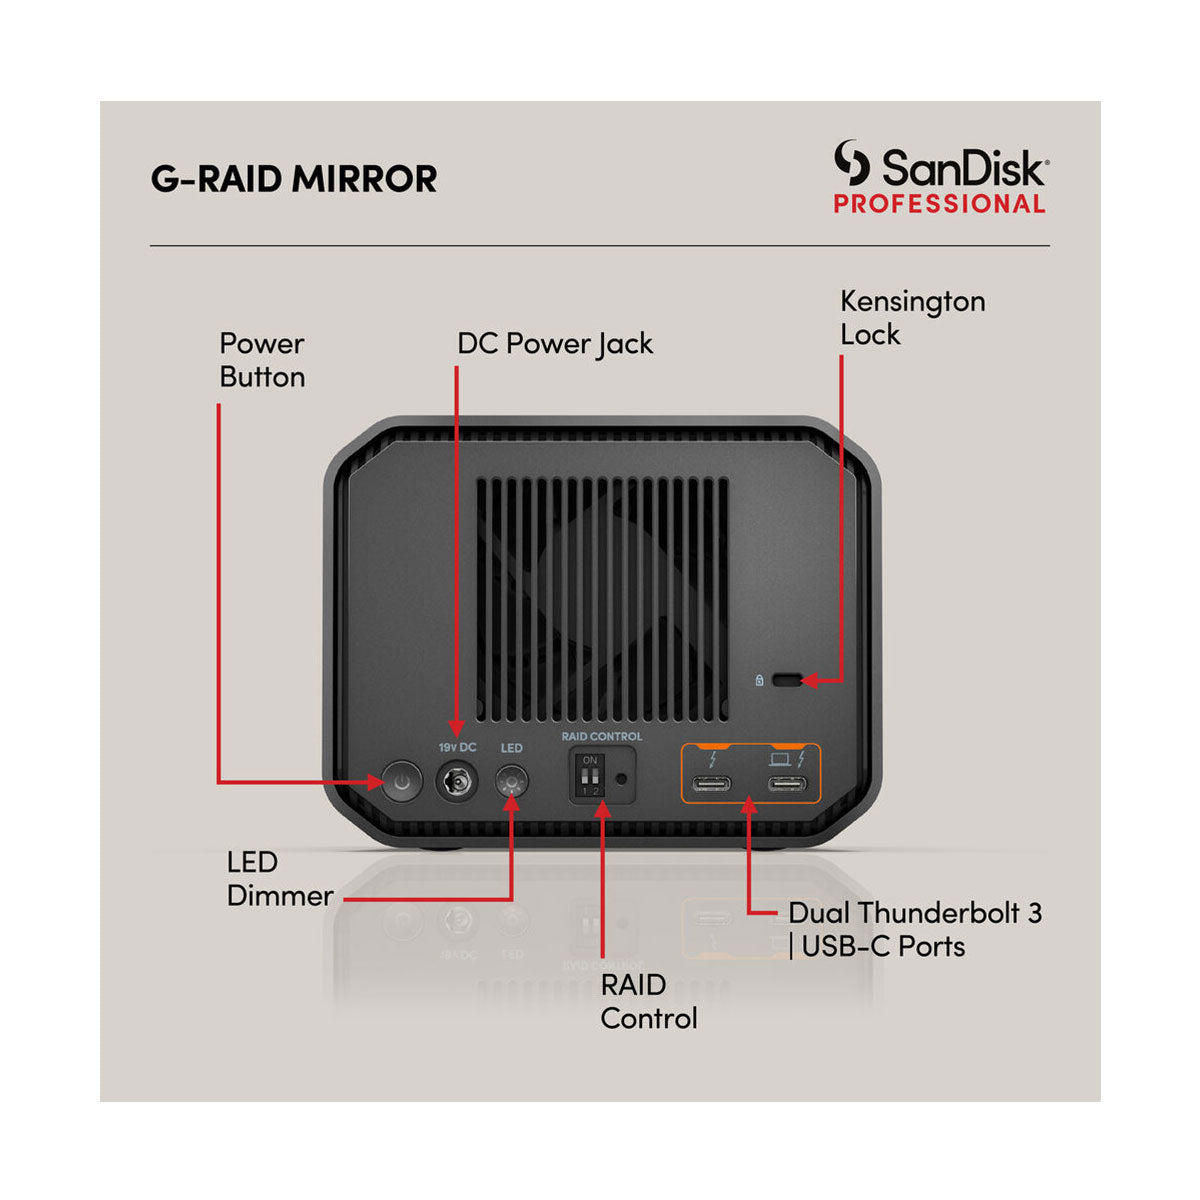 SanDisk Professional 24TB G-RAID Mirror 2-Bay RAID